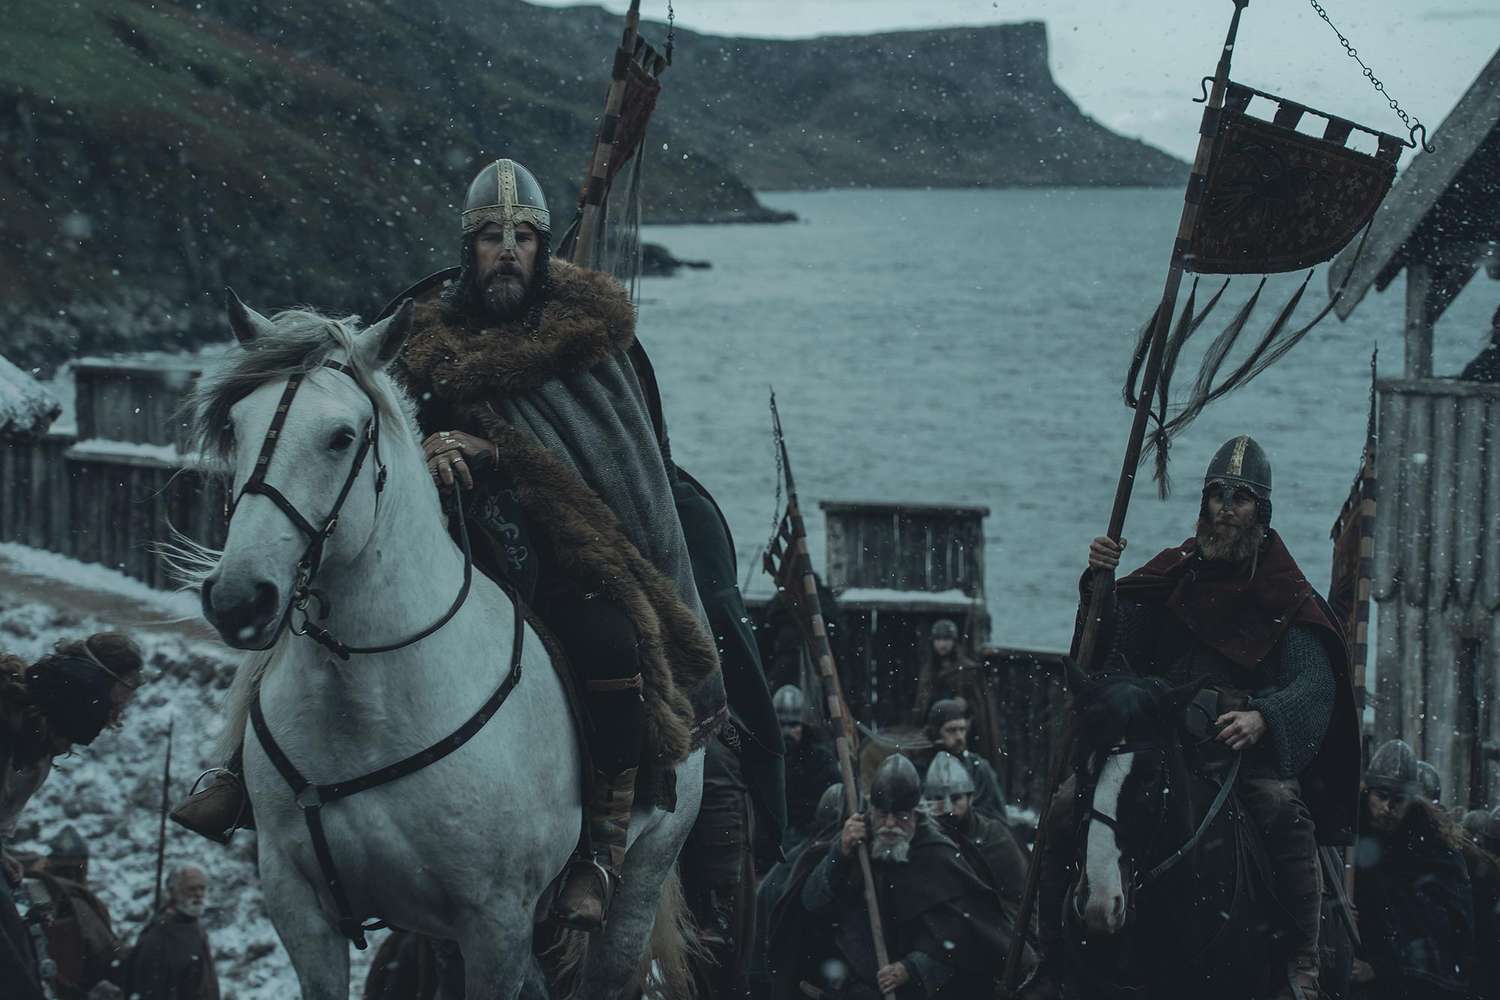 Alexander Skarsgard rages as a Viking in The Northman trailer | EW.com